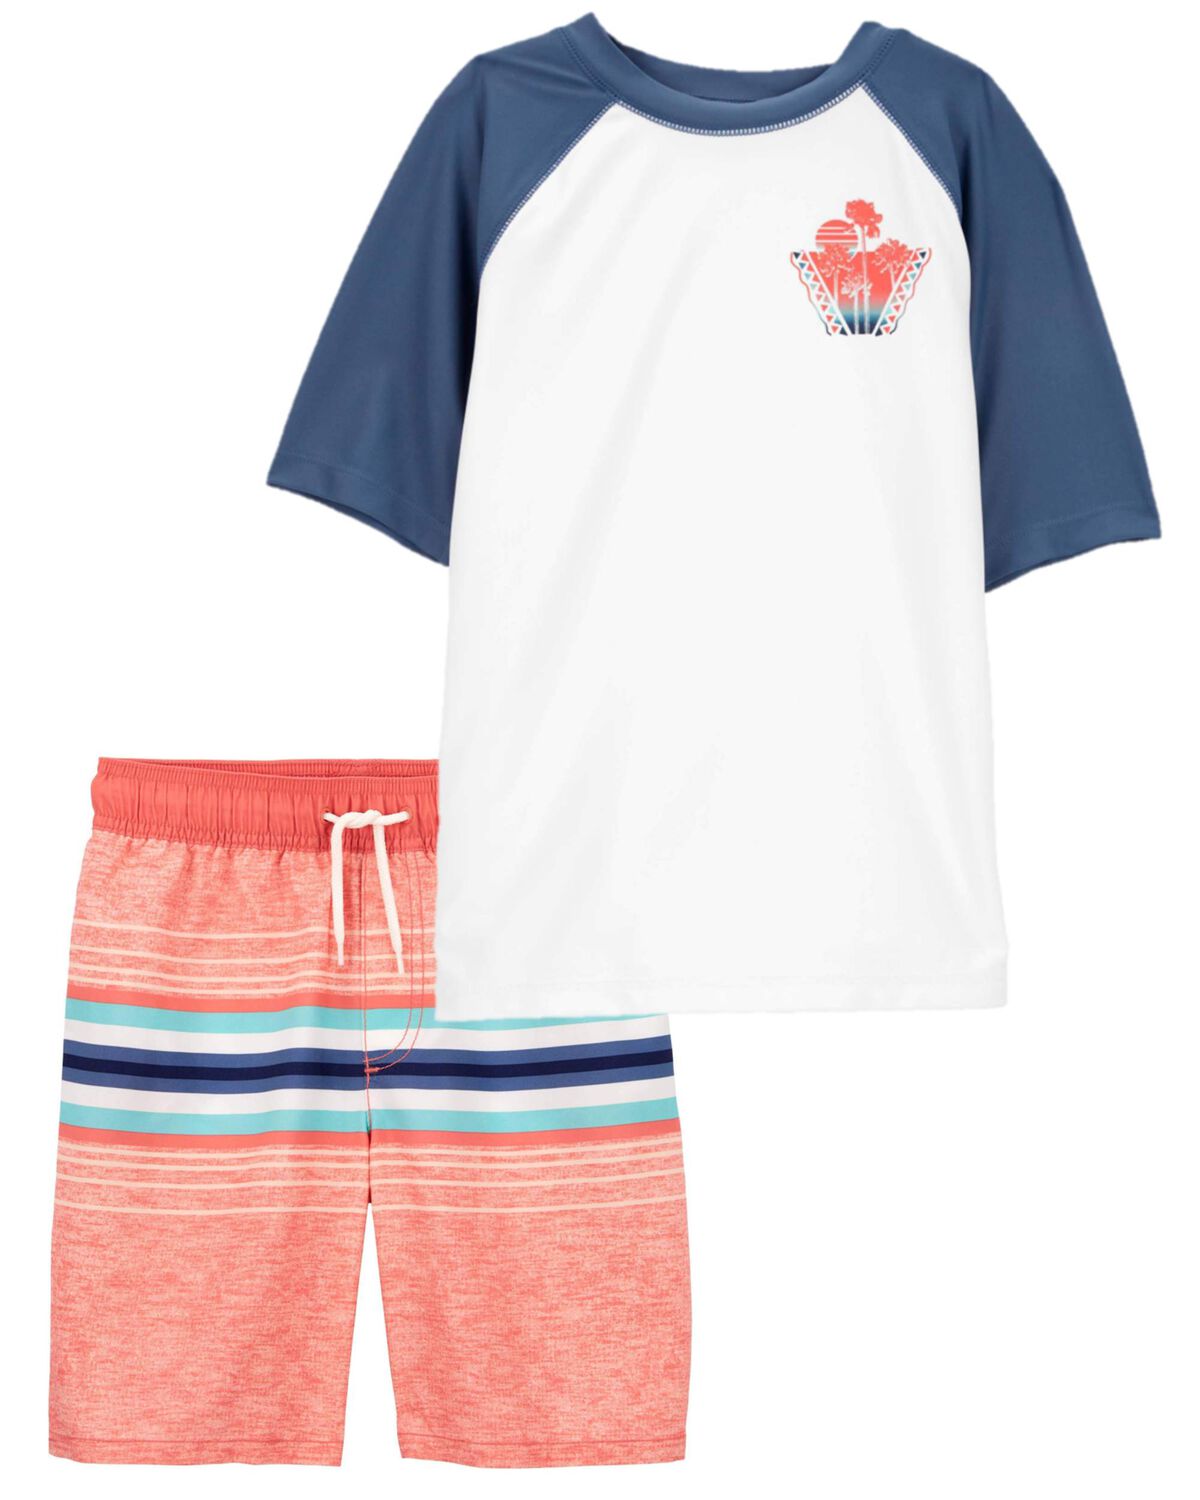 Multi Kid Short-Sleeve Rashguard & Swim Trunks Set | oshkosh.com